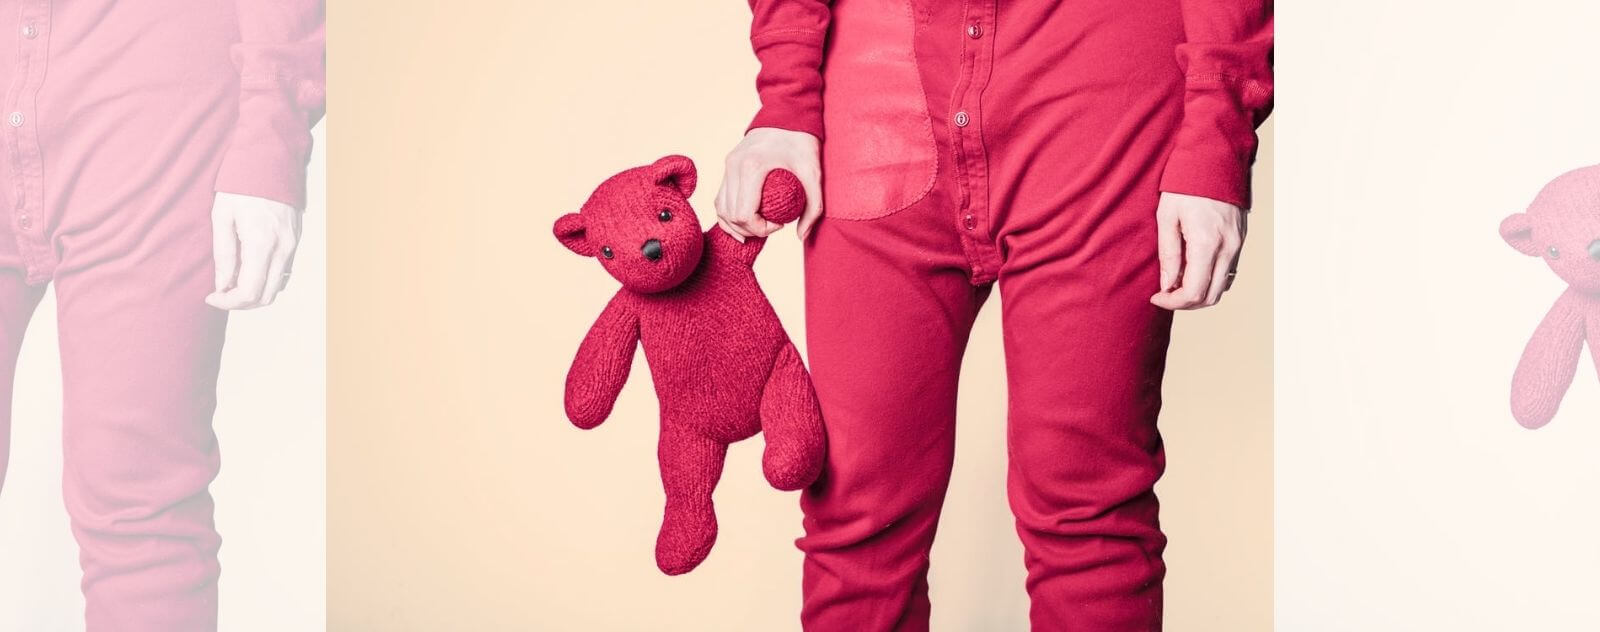 Adulte en Pyjama Rouge avec un Doudou